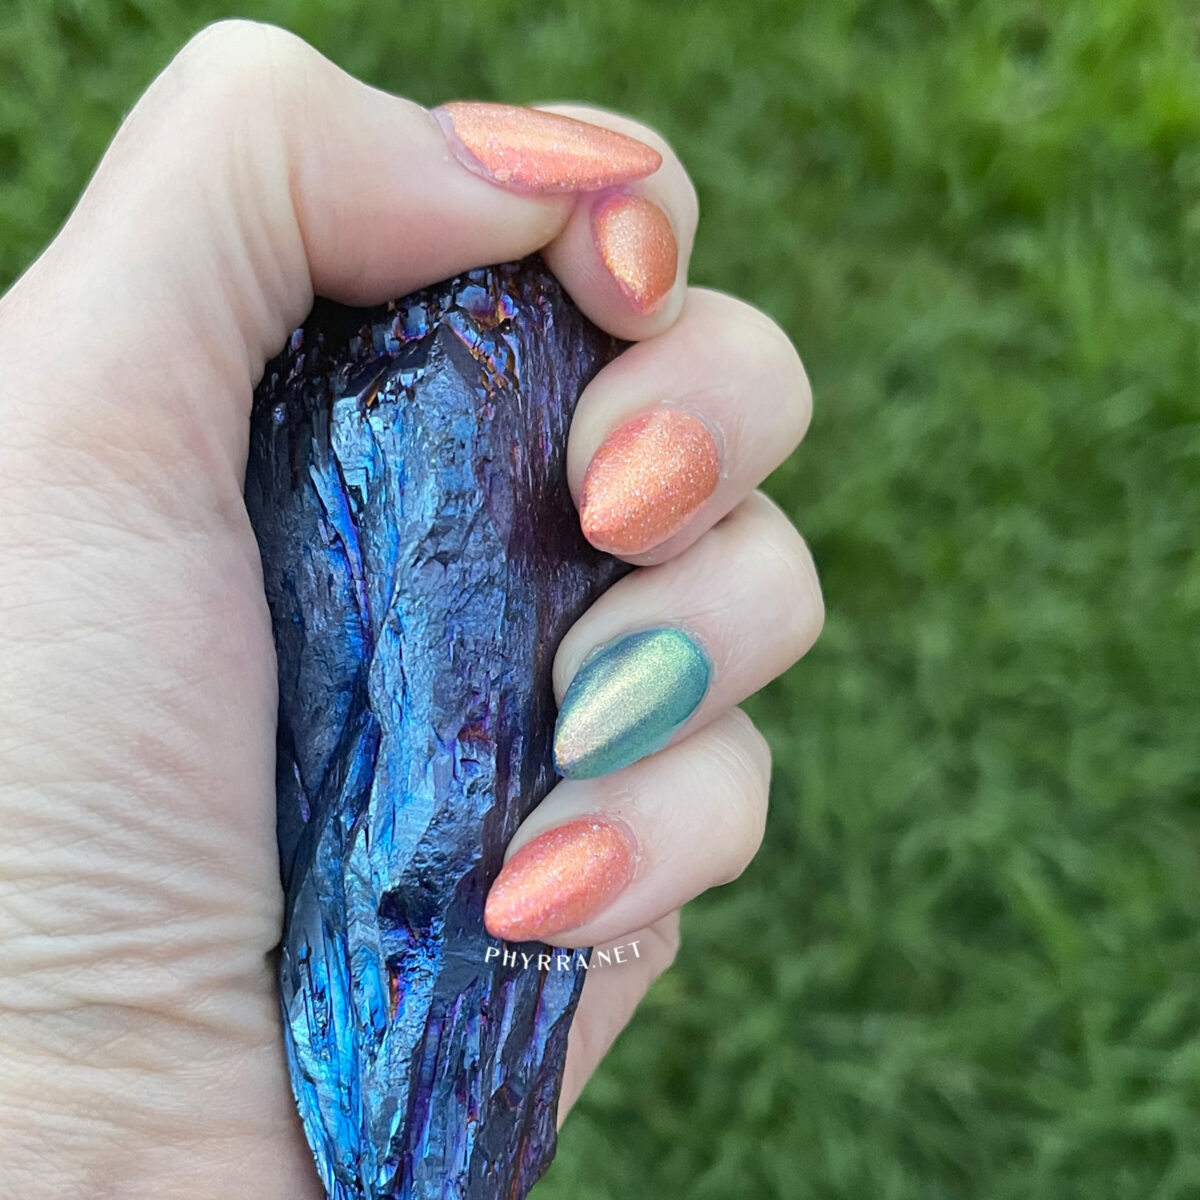 Orange and blue indie nail polish